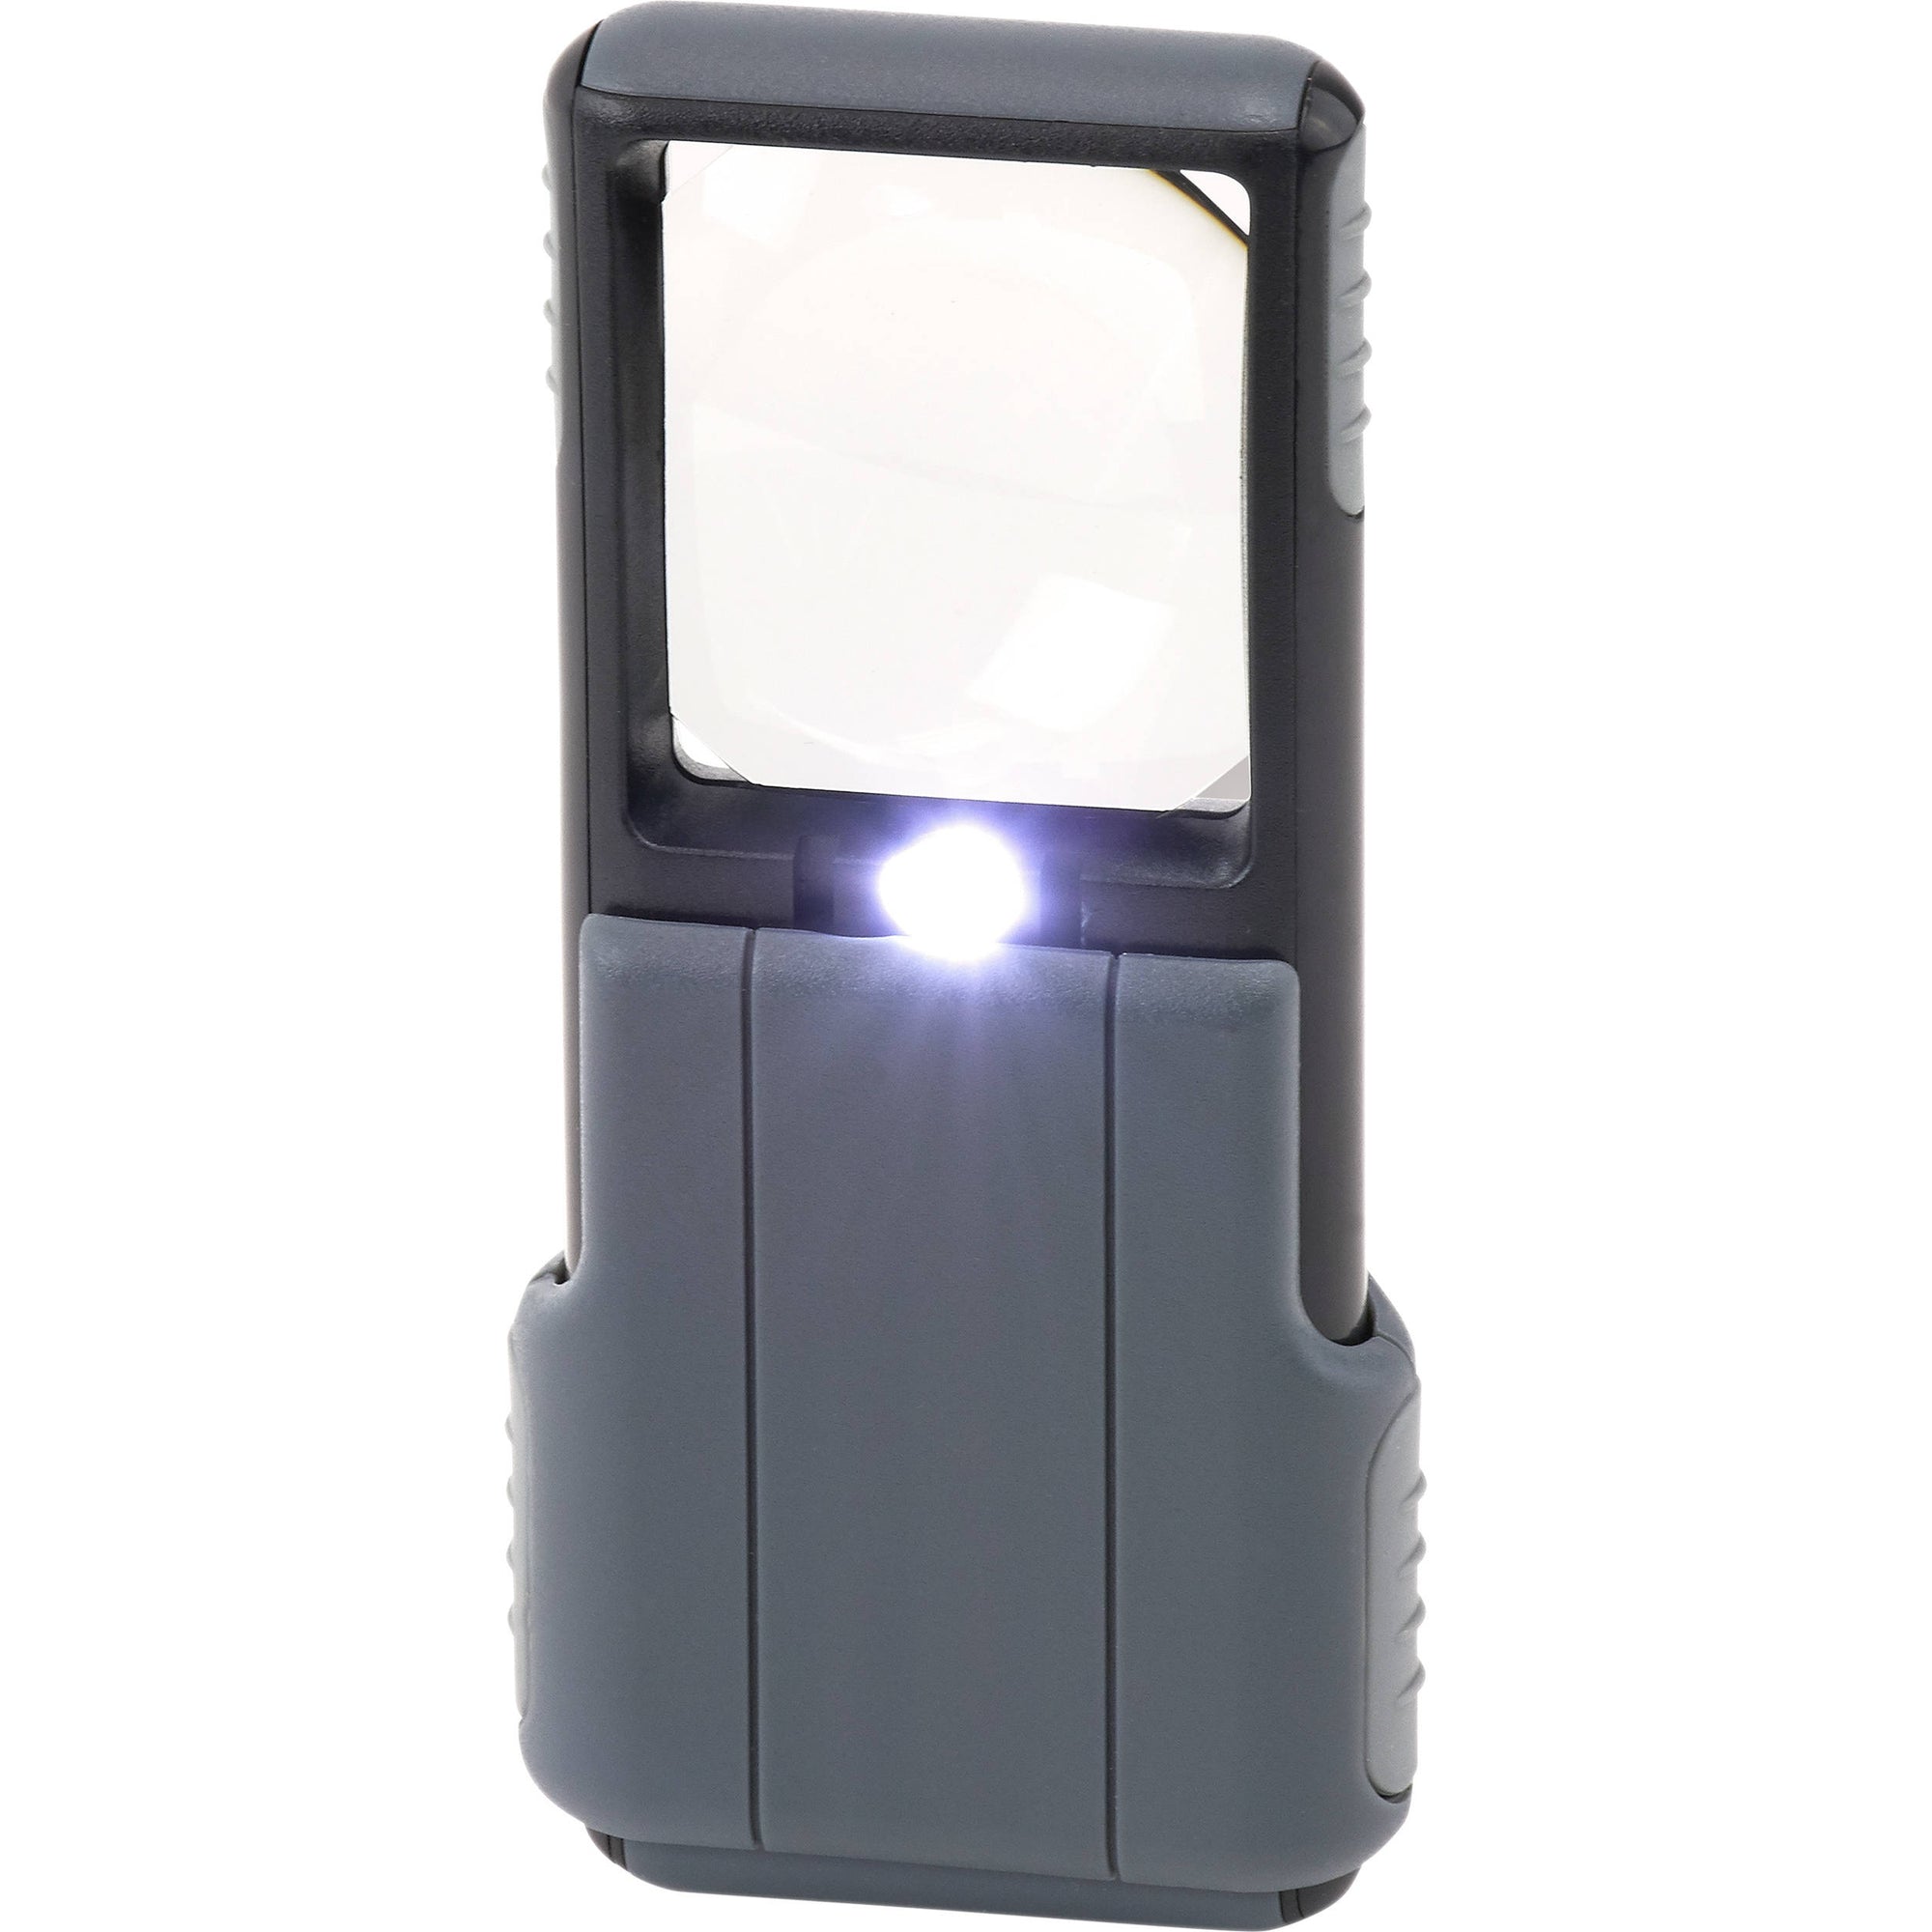 Carson Optical MiniBrite - 5x LED Pocket Magnifier with Aspheric Lens